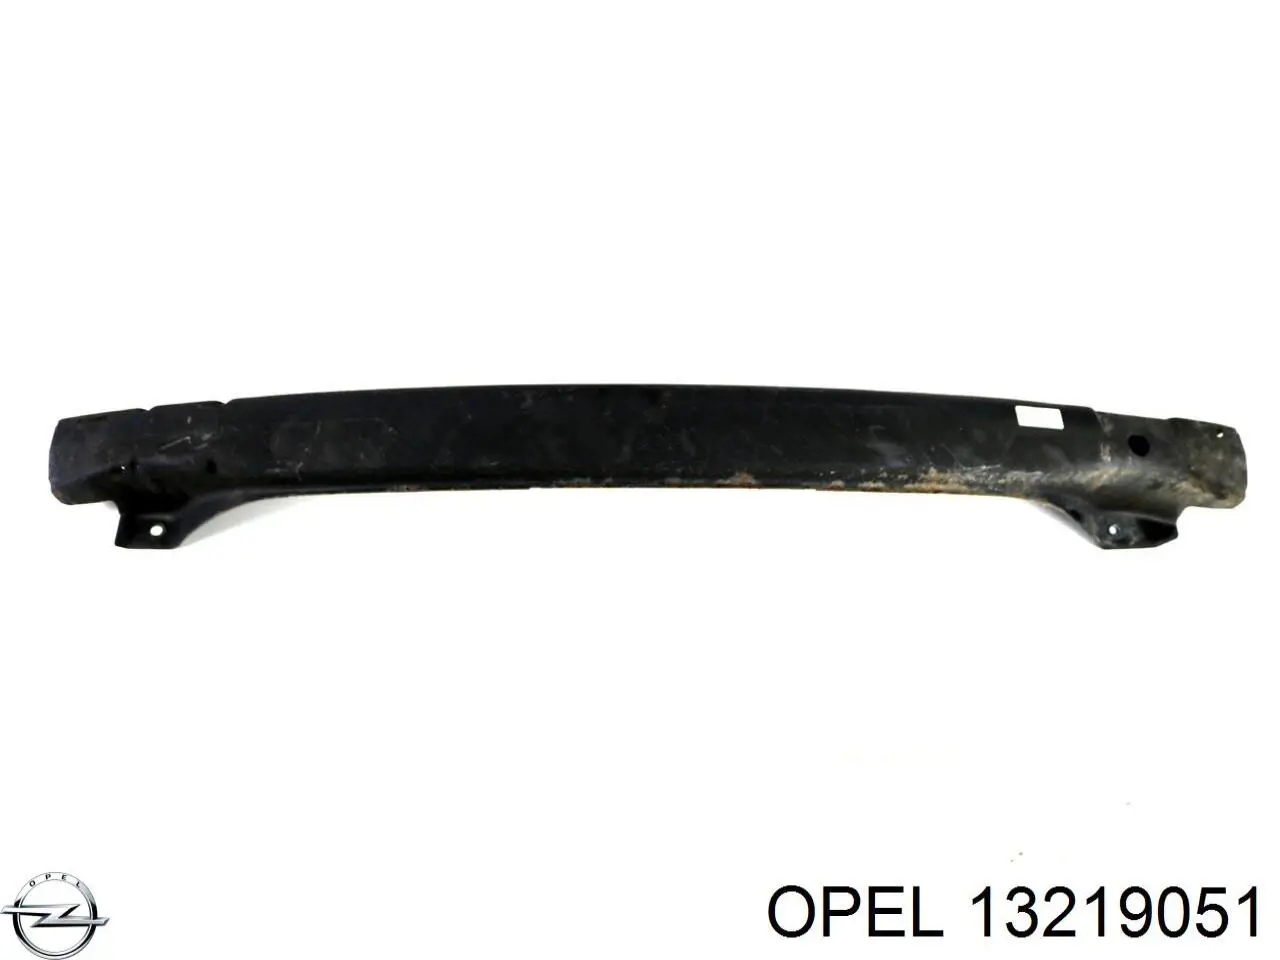 13219051 Opel refuerzo parachoques trasero